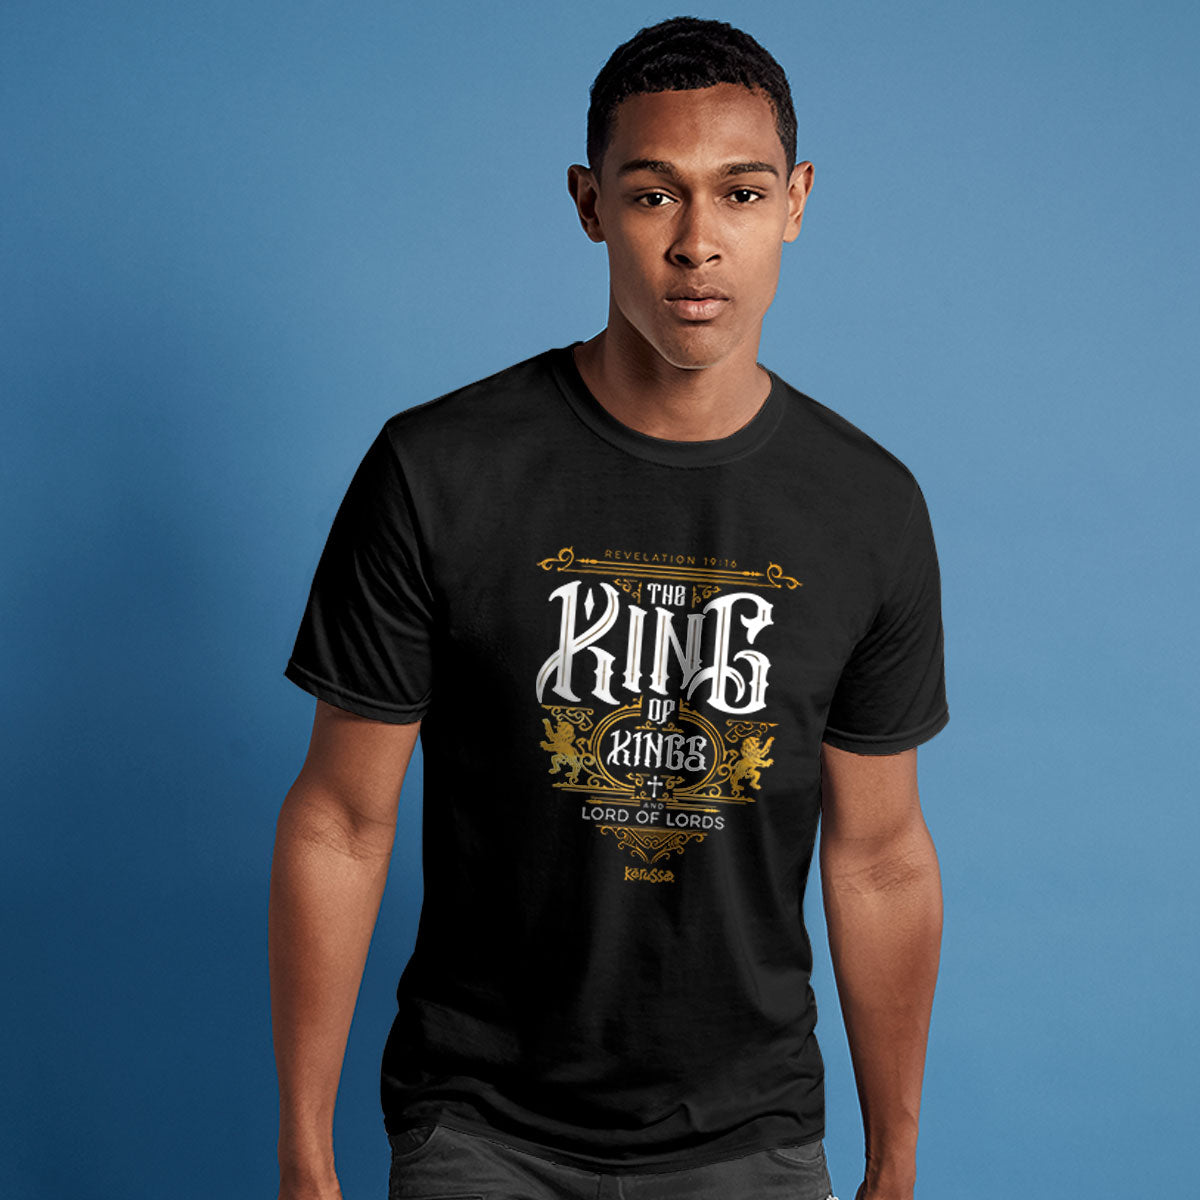 Kerusso Christian T-Shirt The King